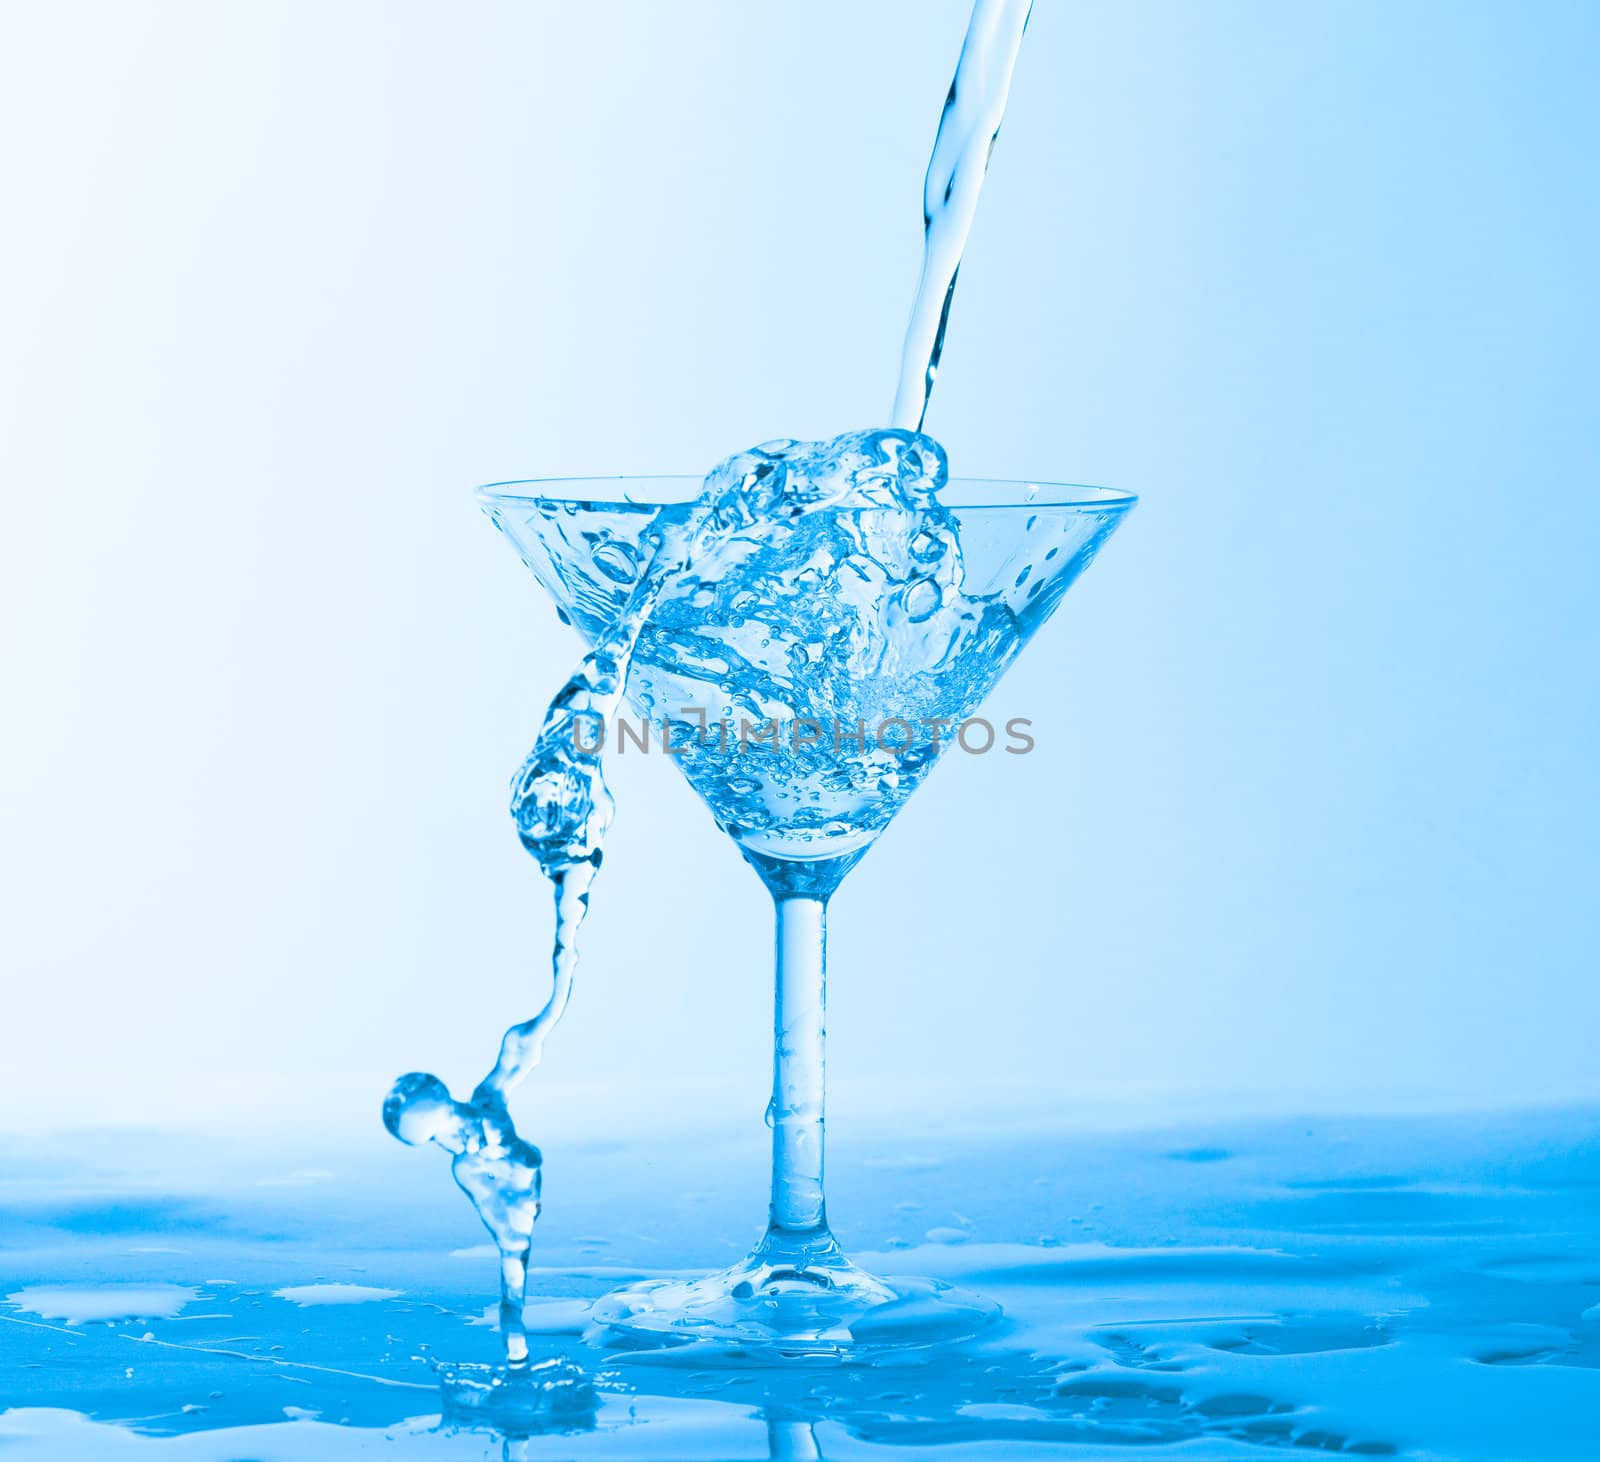 Water Splashing in a Wineglass, on blue background